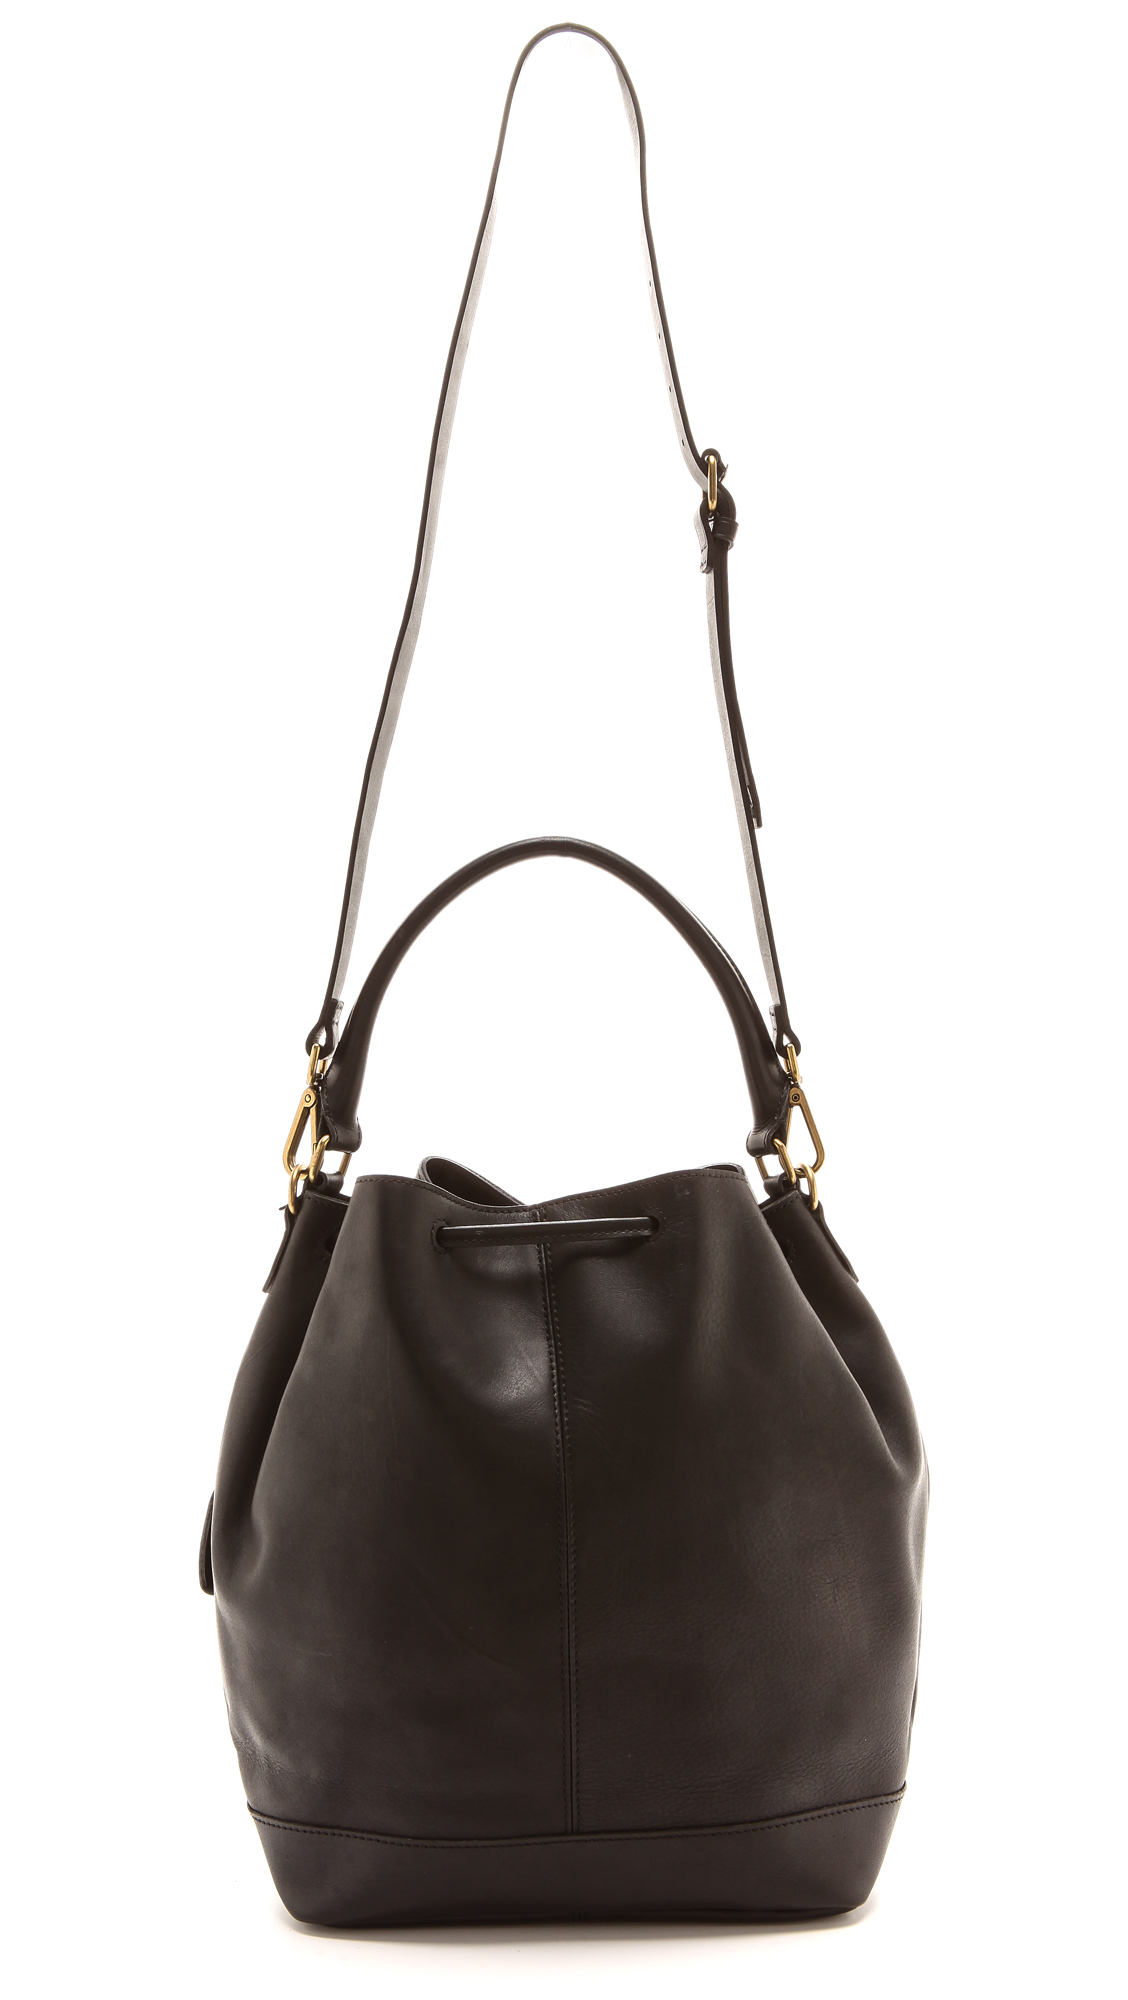 Lyst - Madewell Bucket Bag in Black